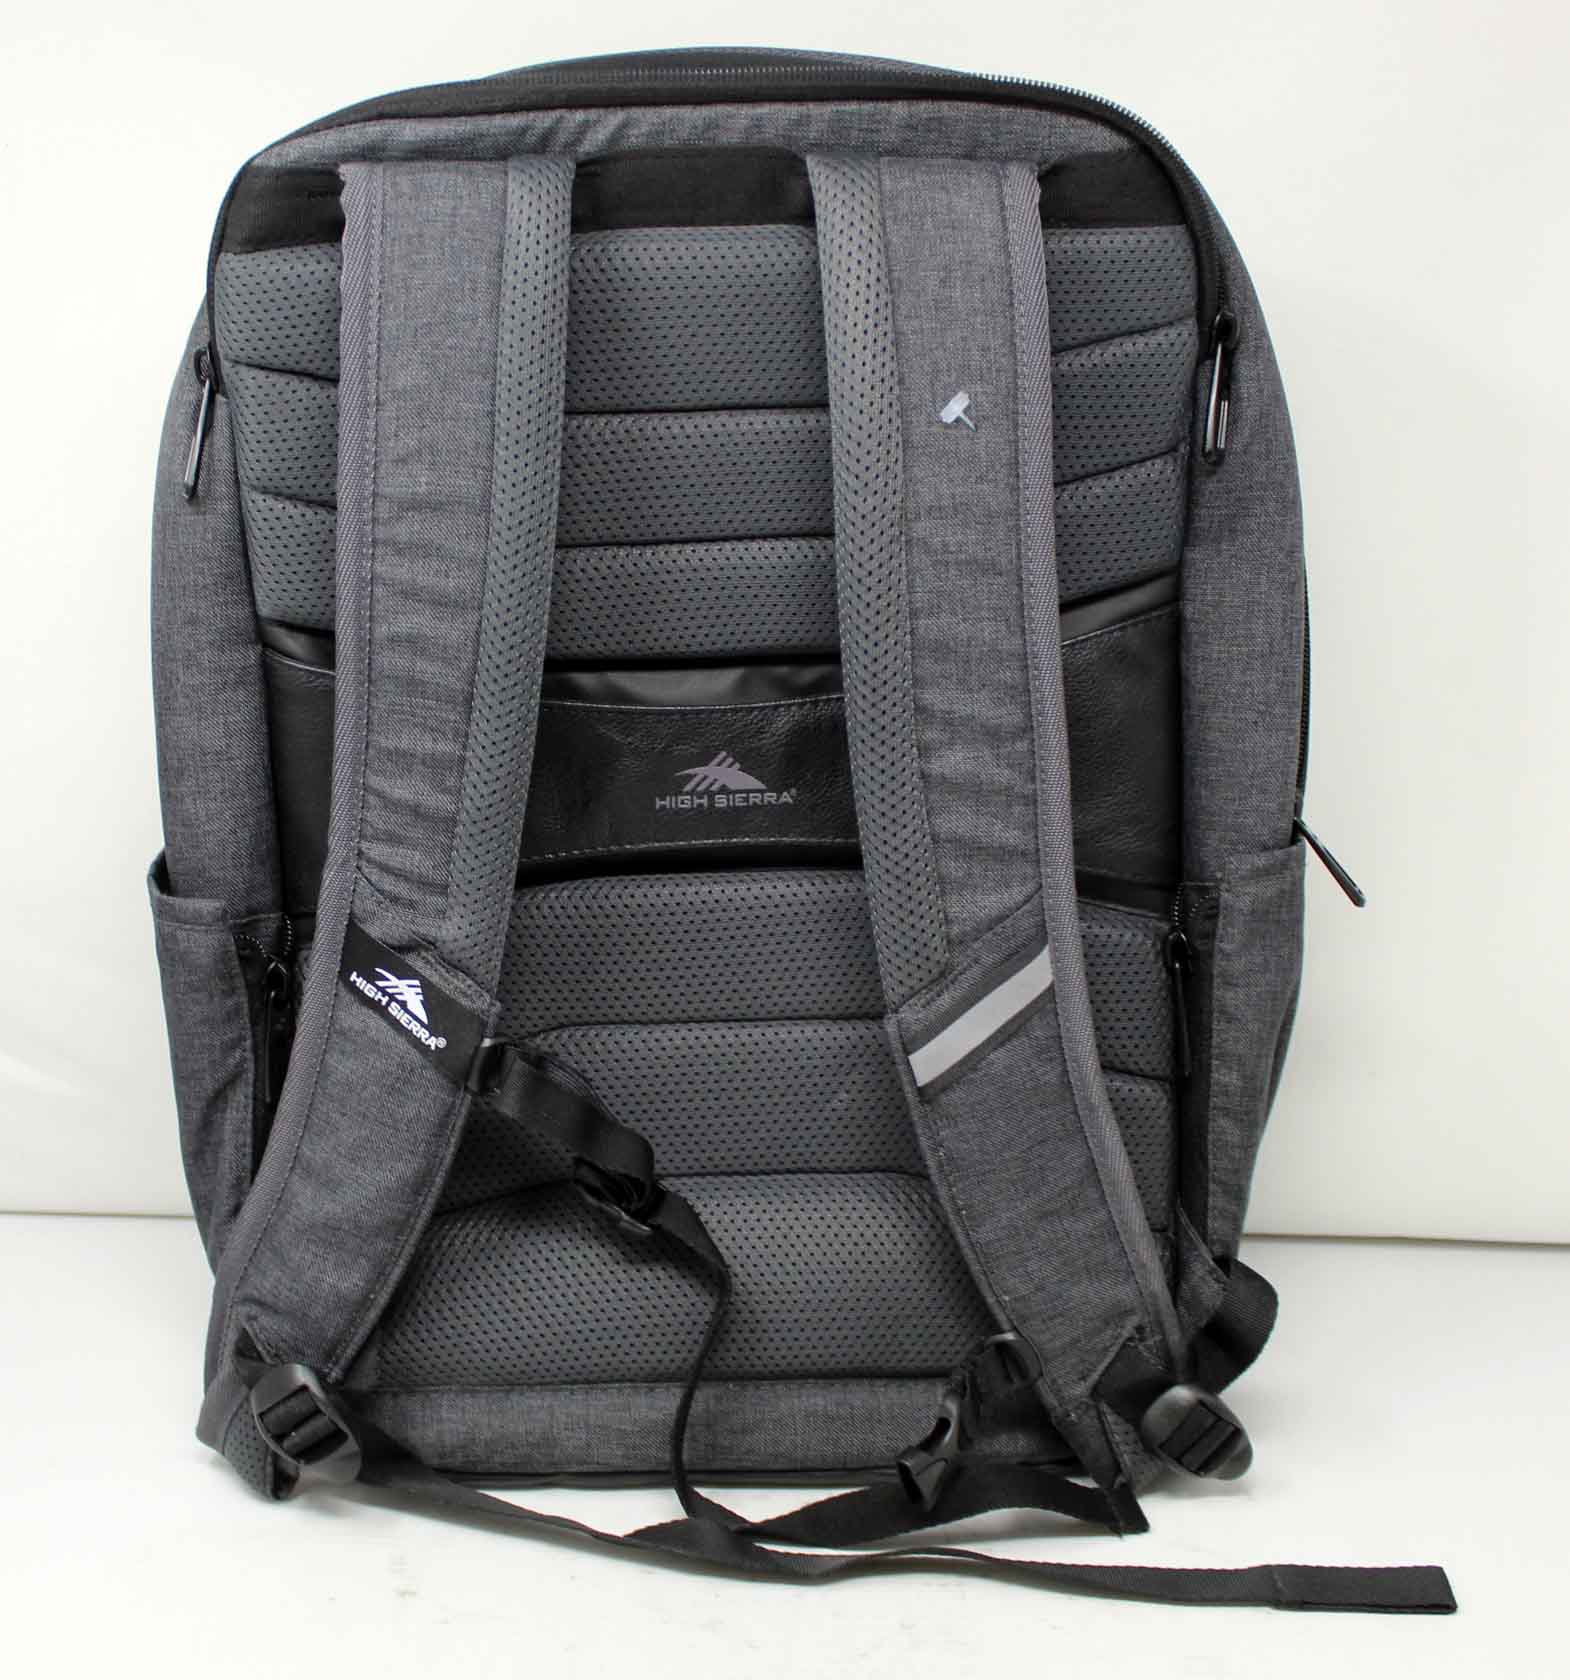 High Sierra Elite Pro Business Backpack Grey 1 Count - image 3 of 3